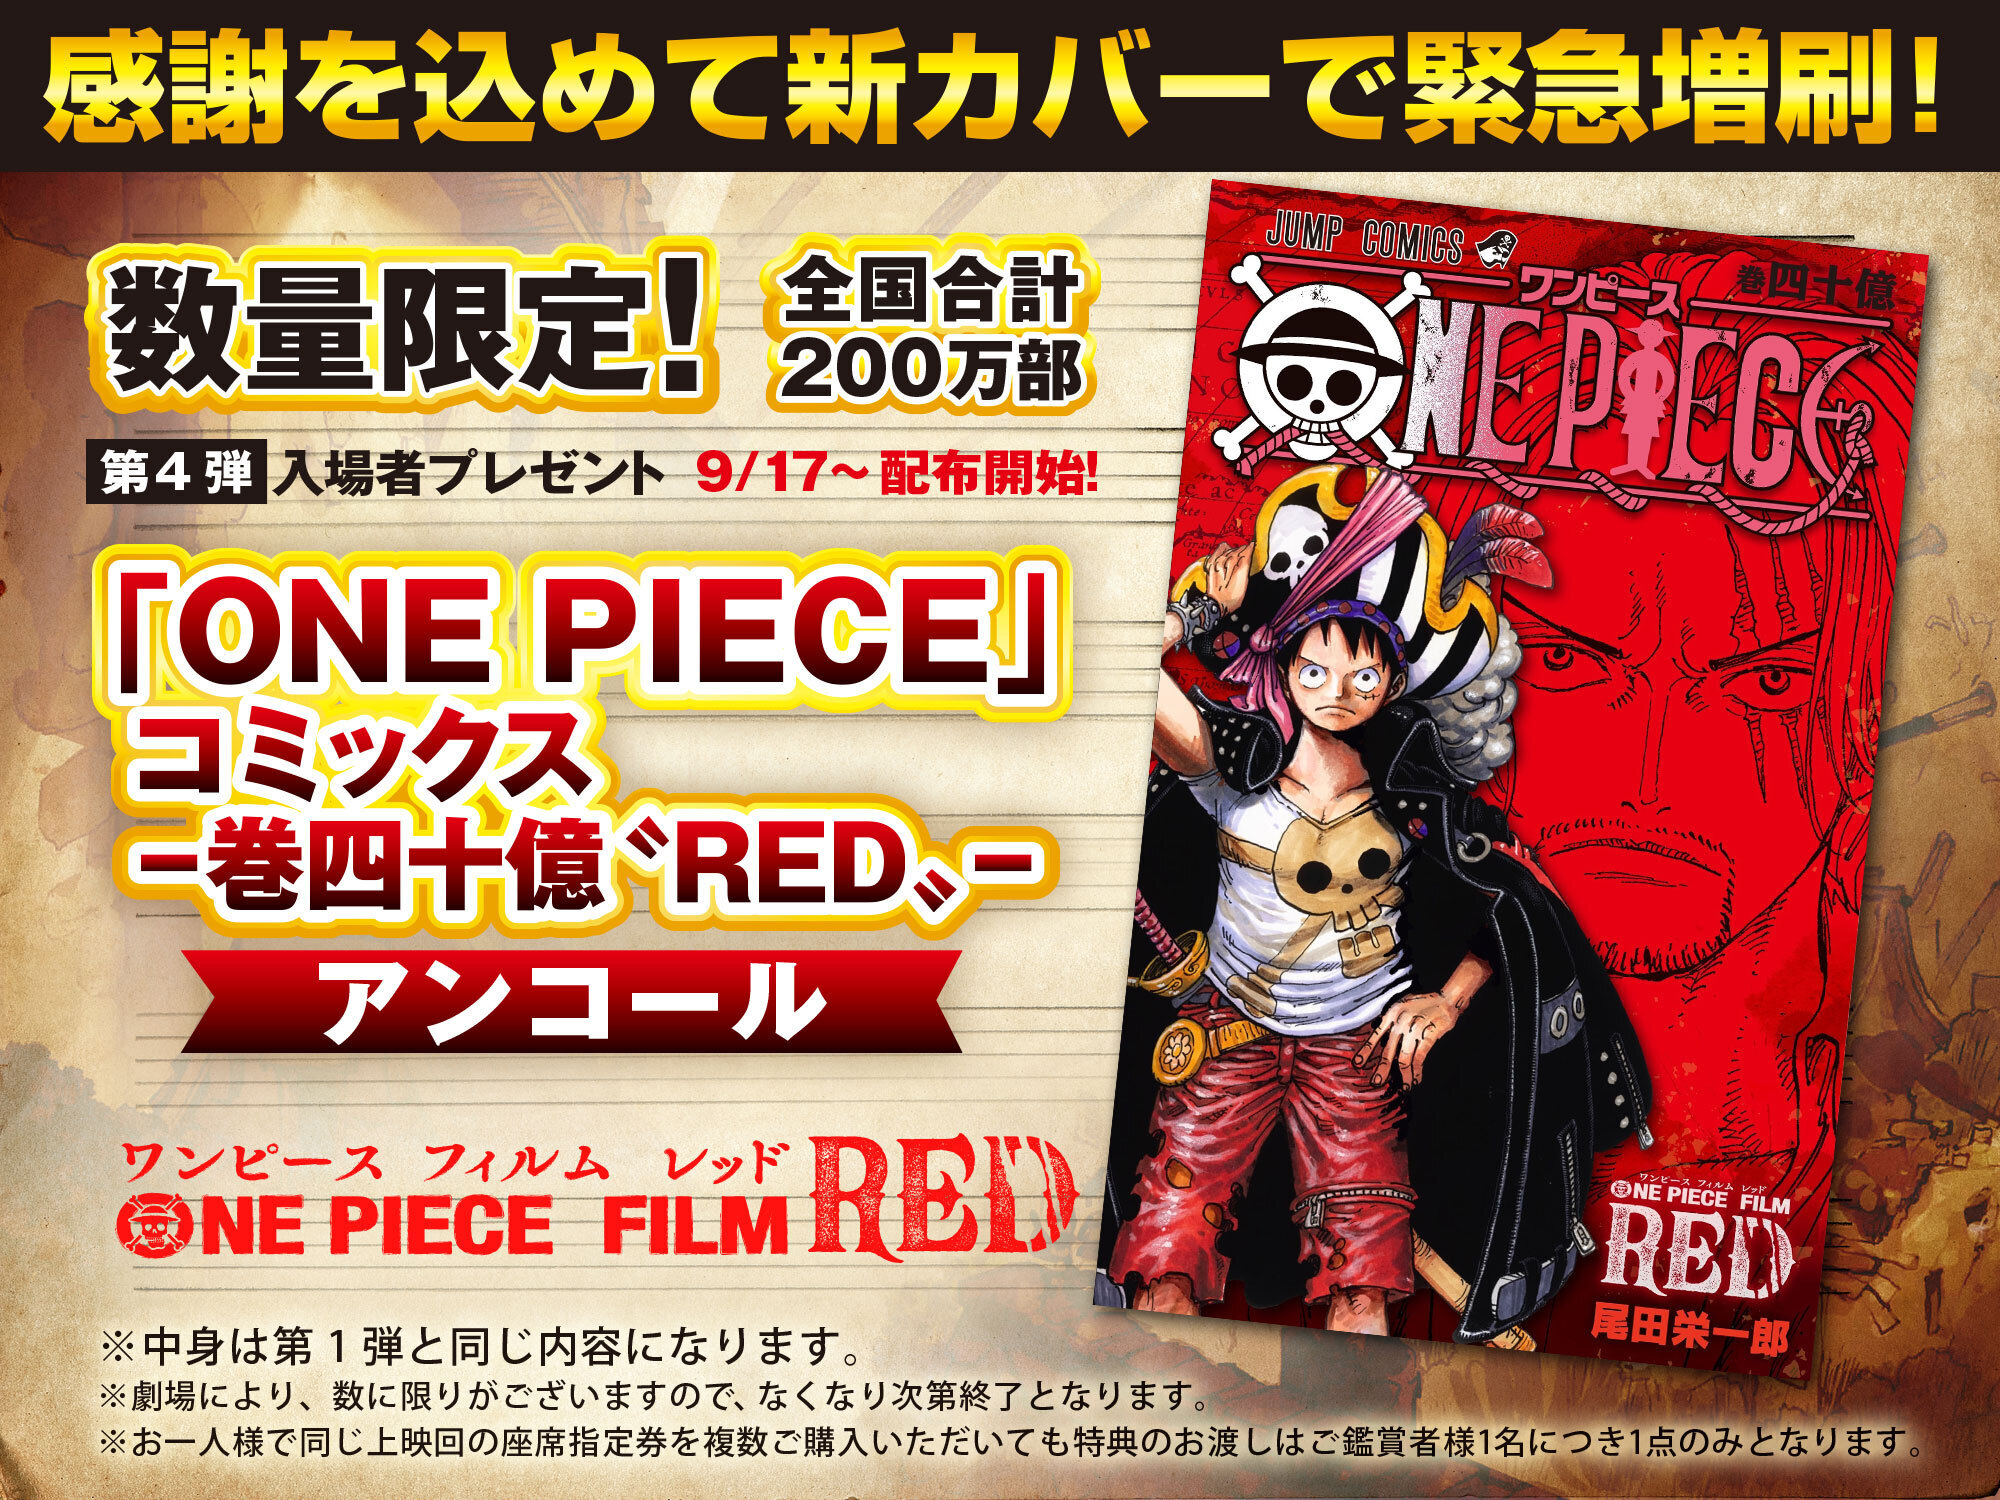 「ONE PIECE FILM RED」40億巻が入場特典に - アキバ総研